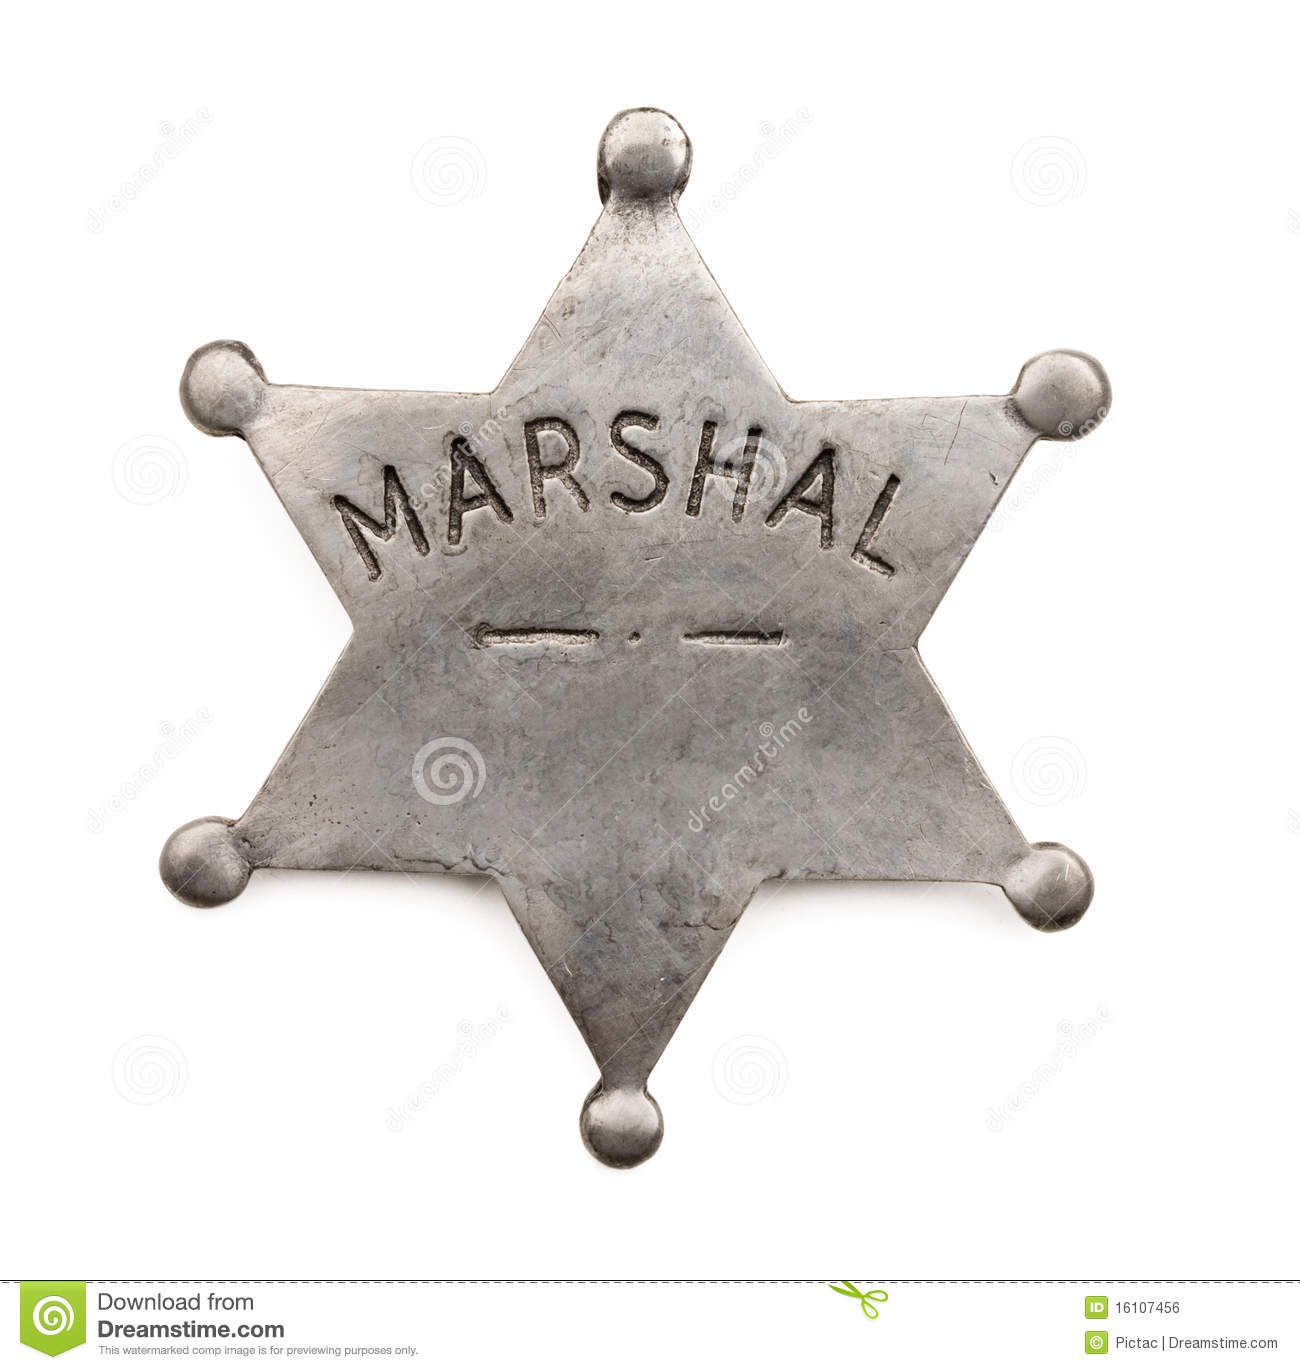 Vintage Marshal Badge Royalty Free Stock Image   Image  16107456